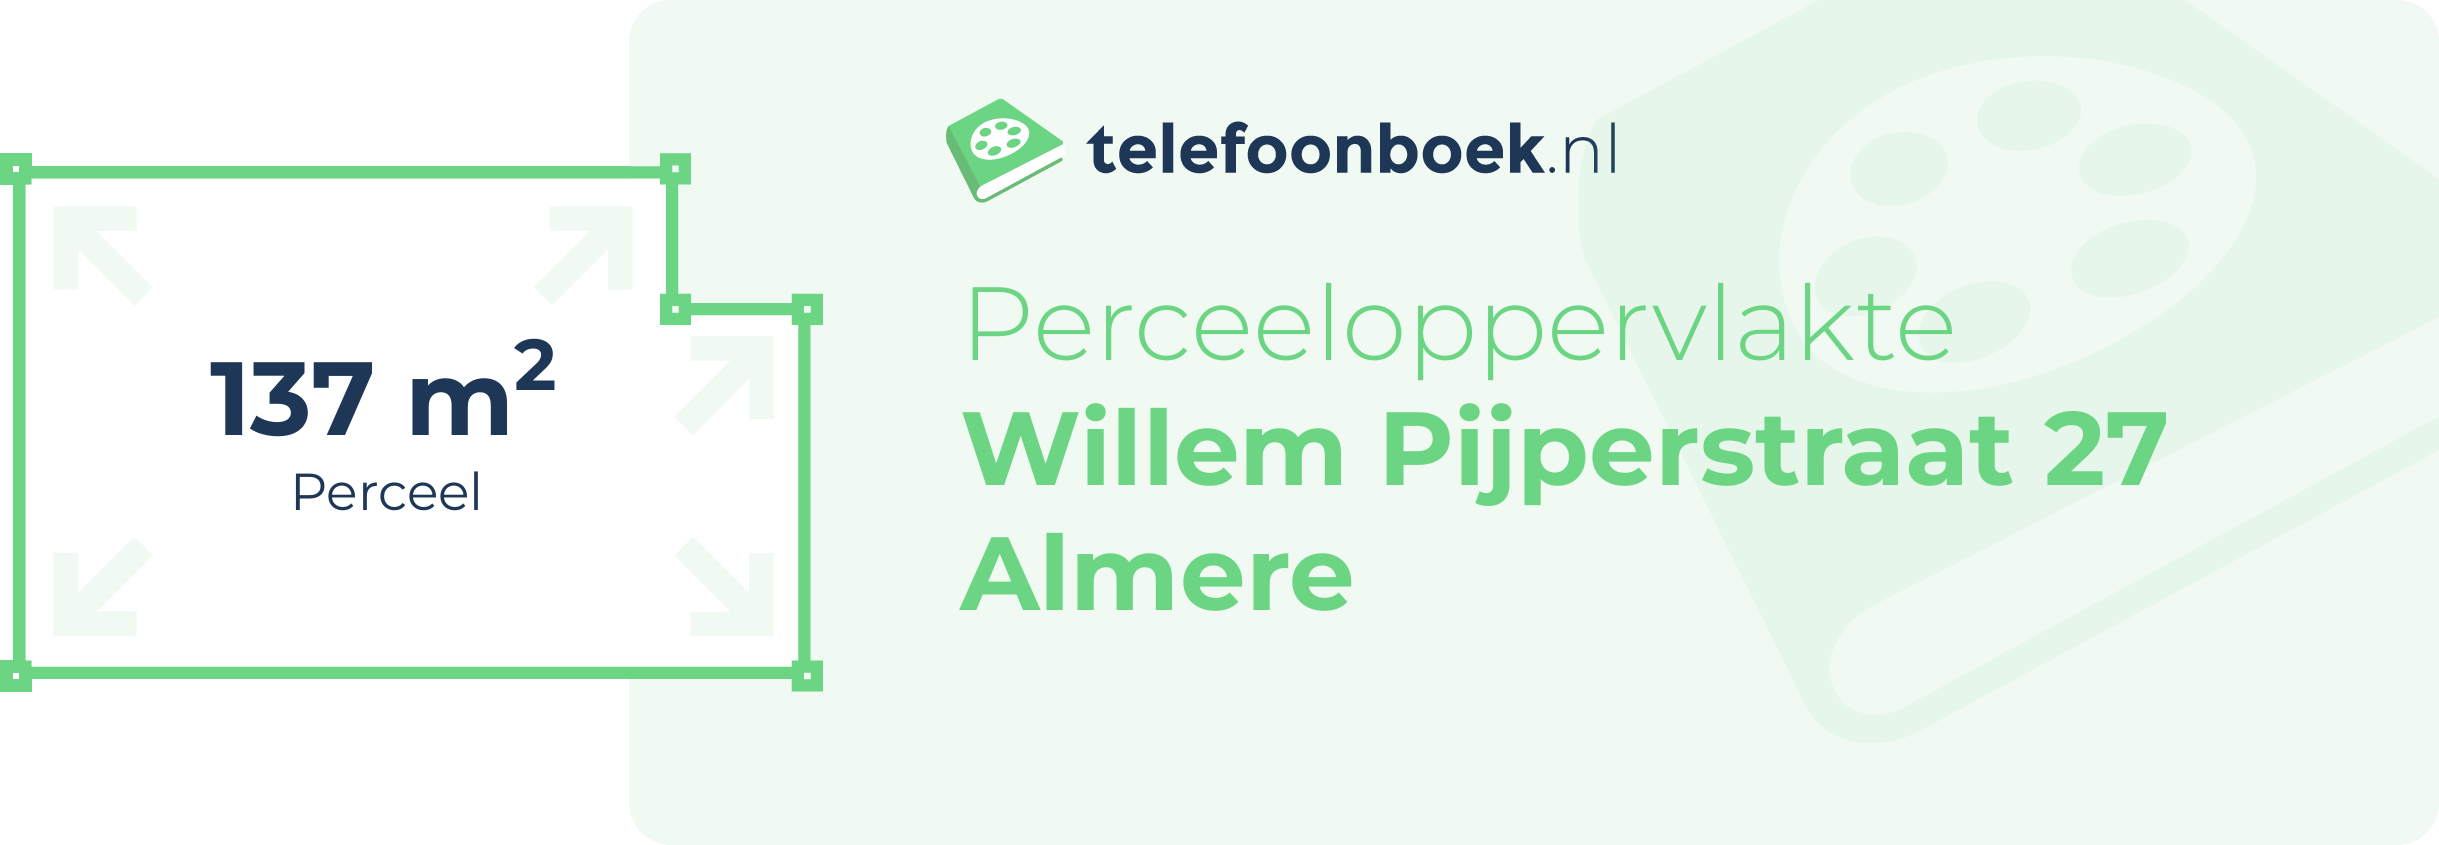 Perceeloppervlakte Willem Pijperstraat 27 Almere